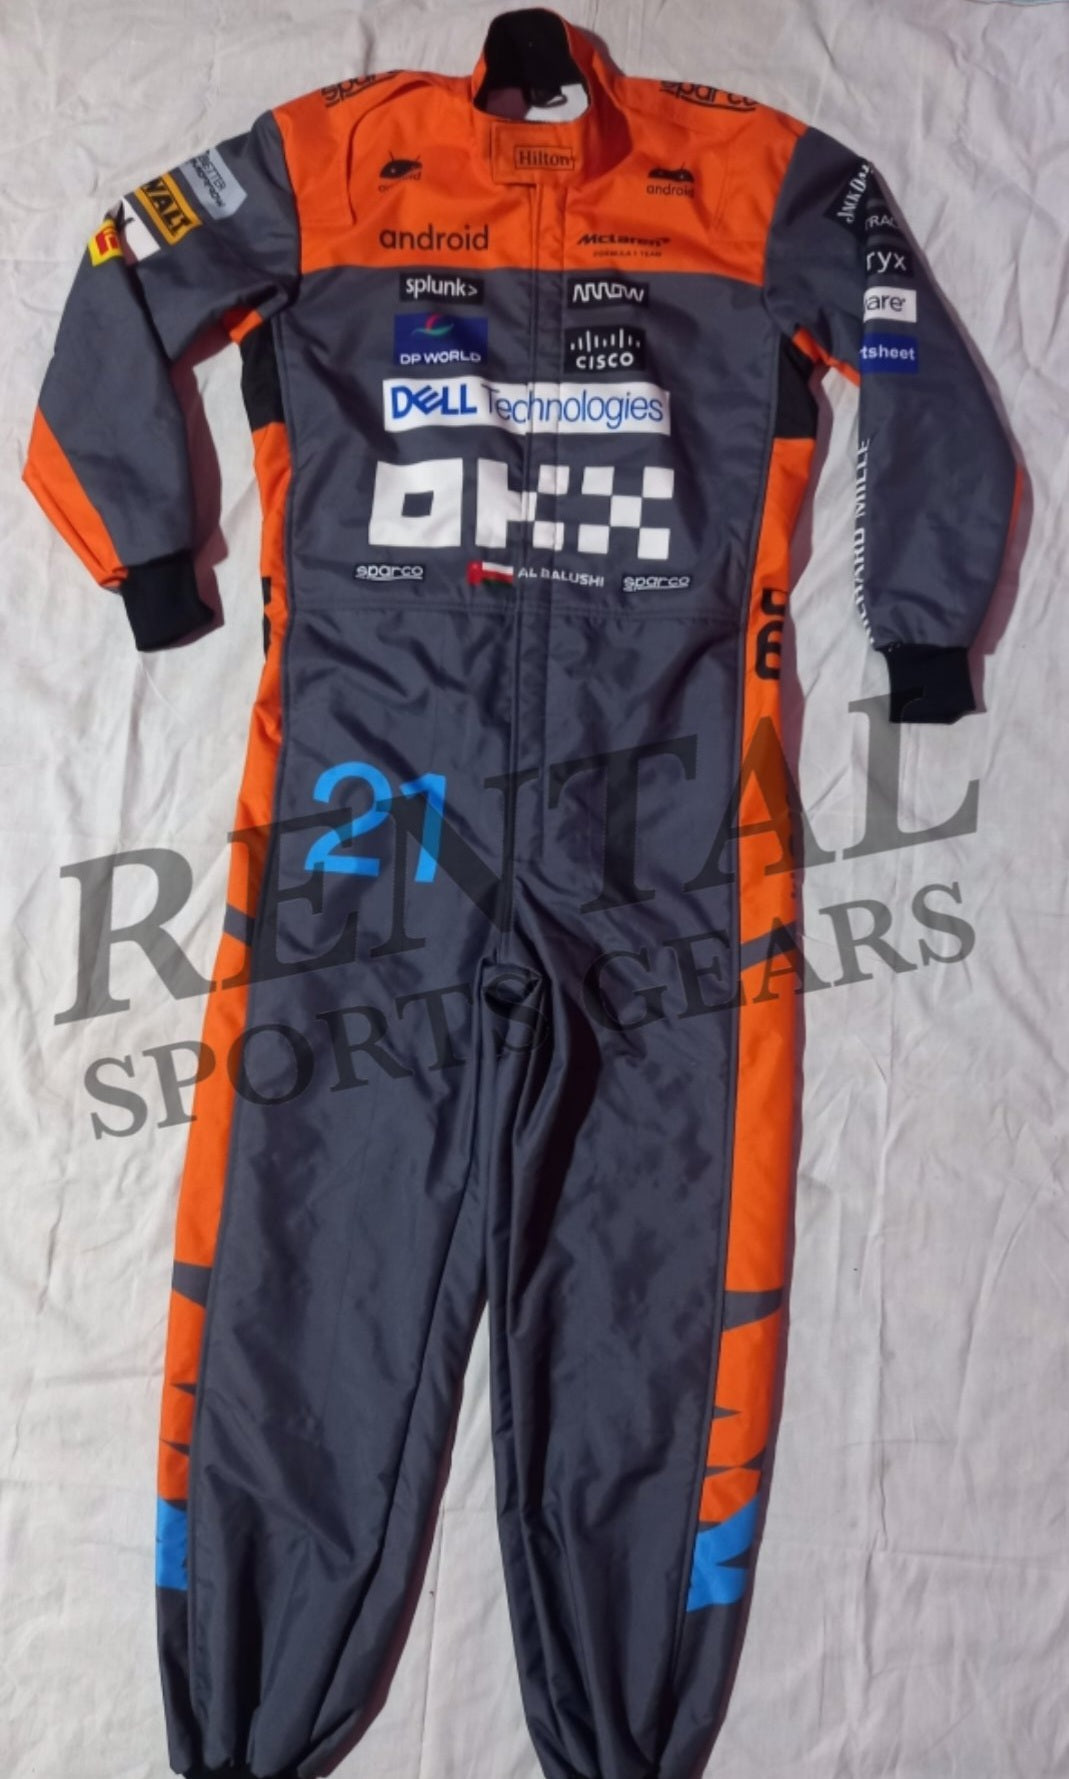 Oscar Piastri Maclaren F1 2023 Race Suit